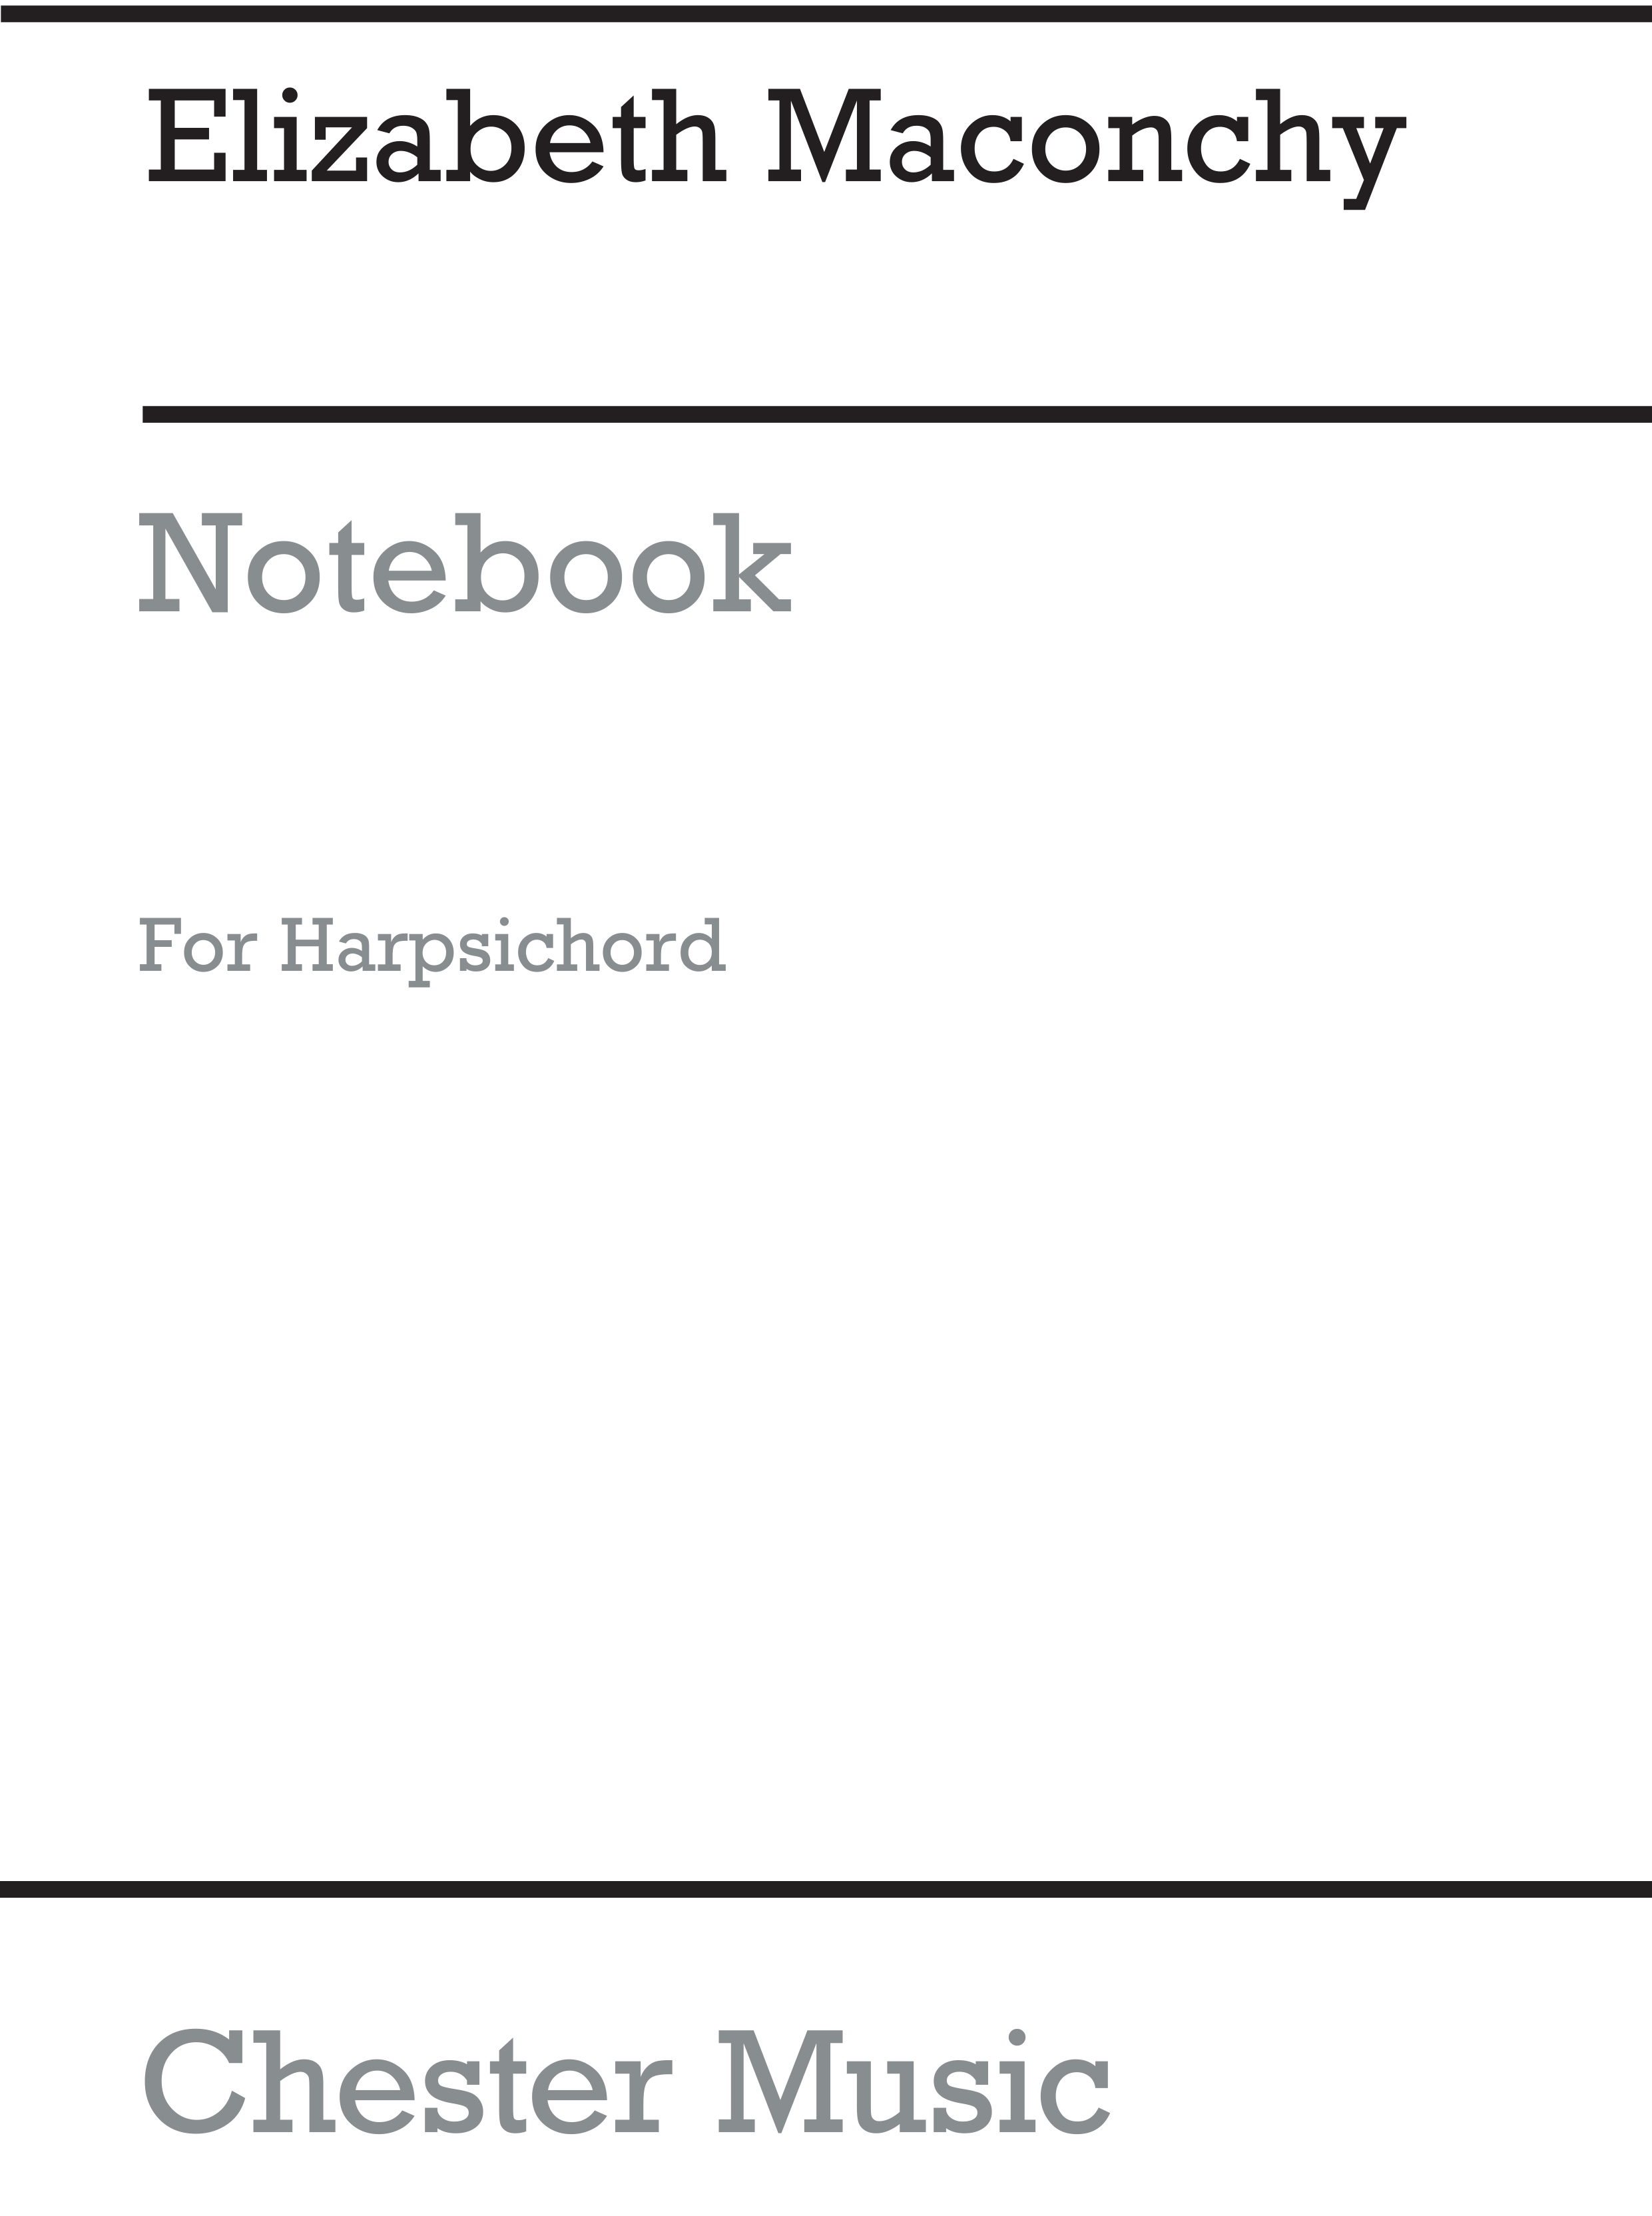 Elizabeth Maconchy: Elizabeth Maconchy Notebook For Harpsichord: Harpsichord: